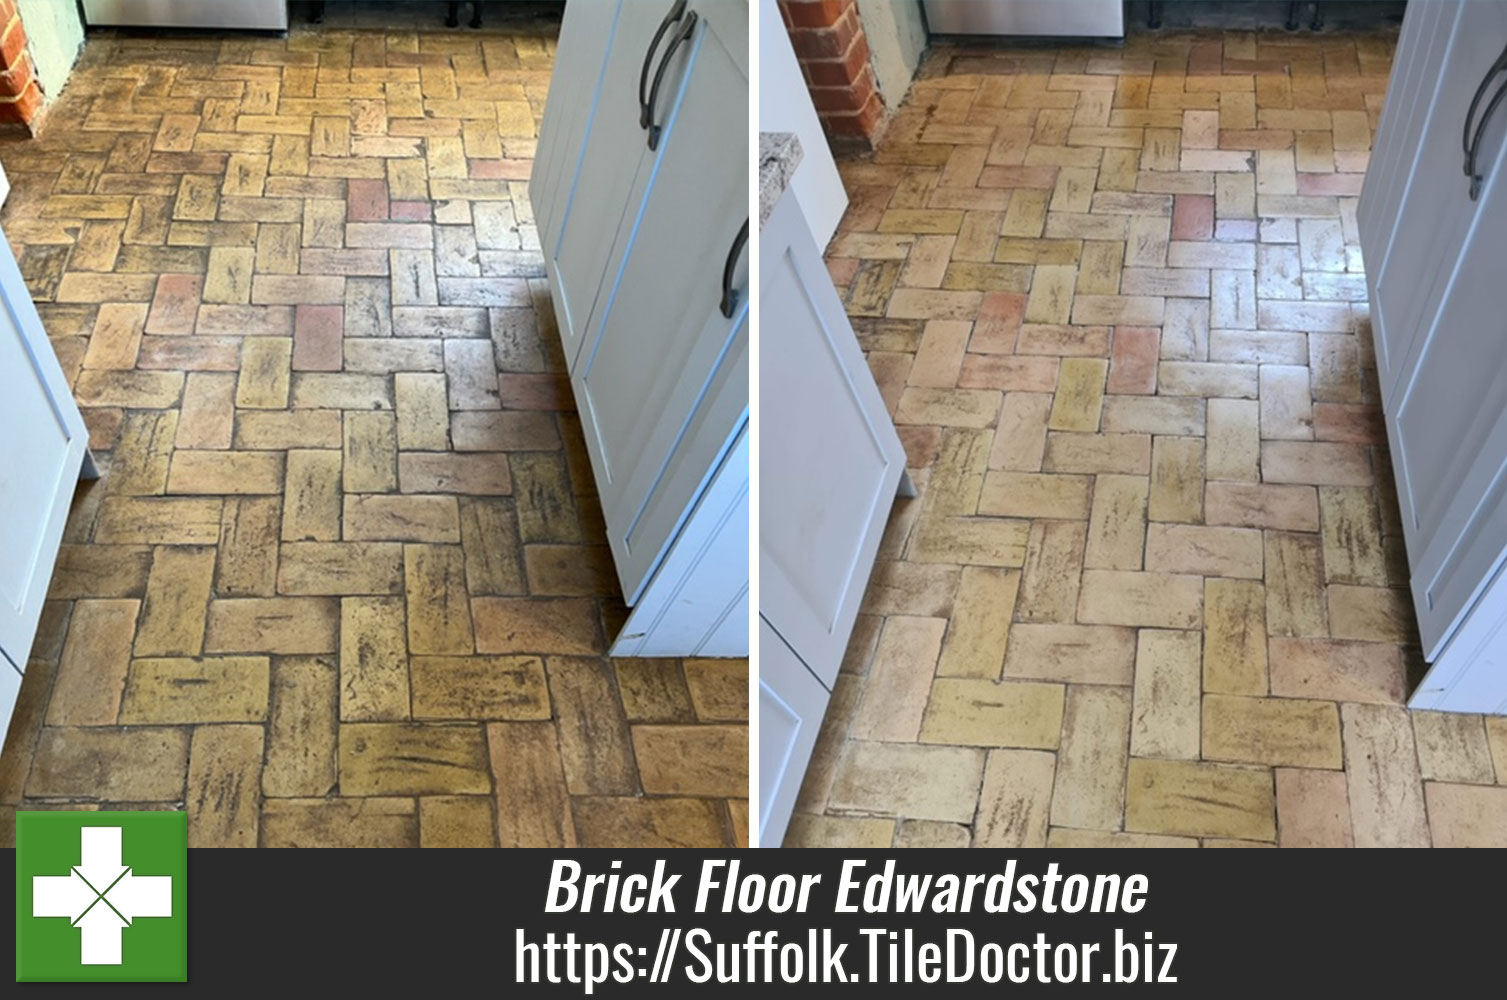 Brick Tiled Kitchen Floor Renovated in Edwardstone